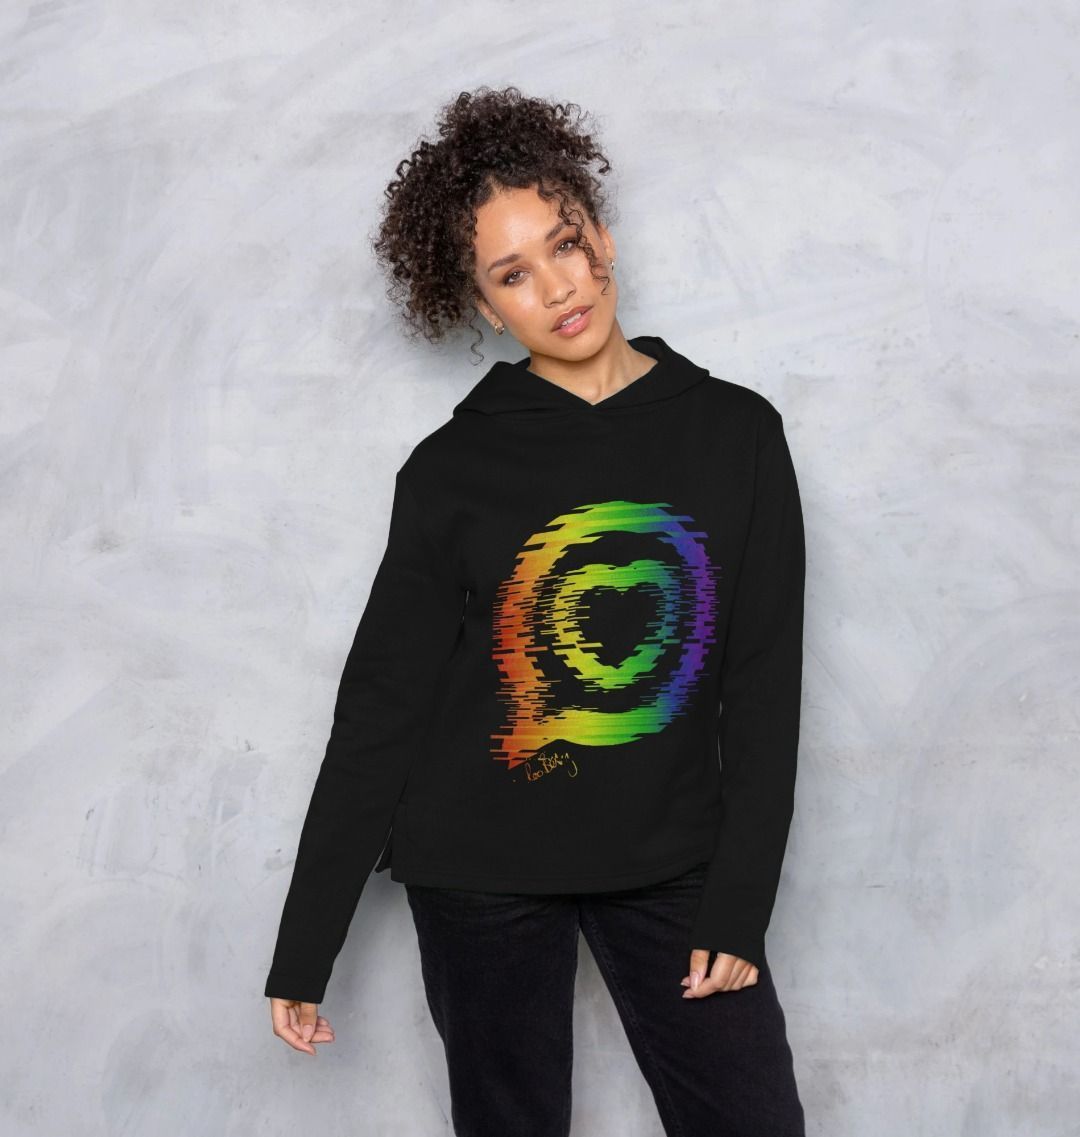 Model wear relxed fit hooded sweatshirt with the roo betty logo of a heart in a speech bubble in rainbow colours.